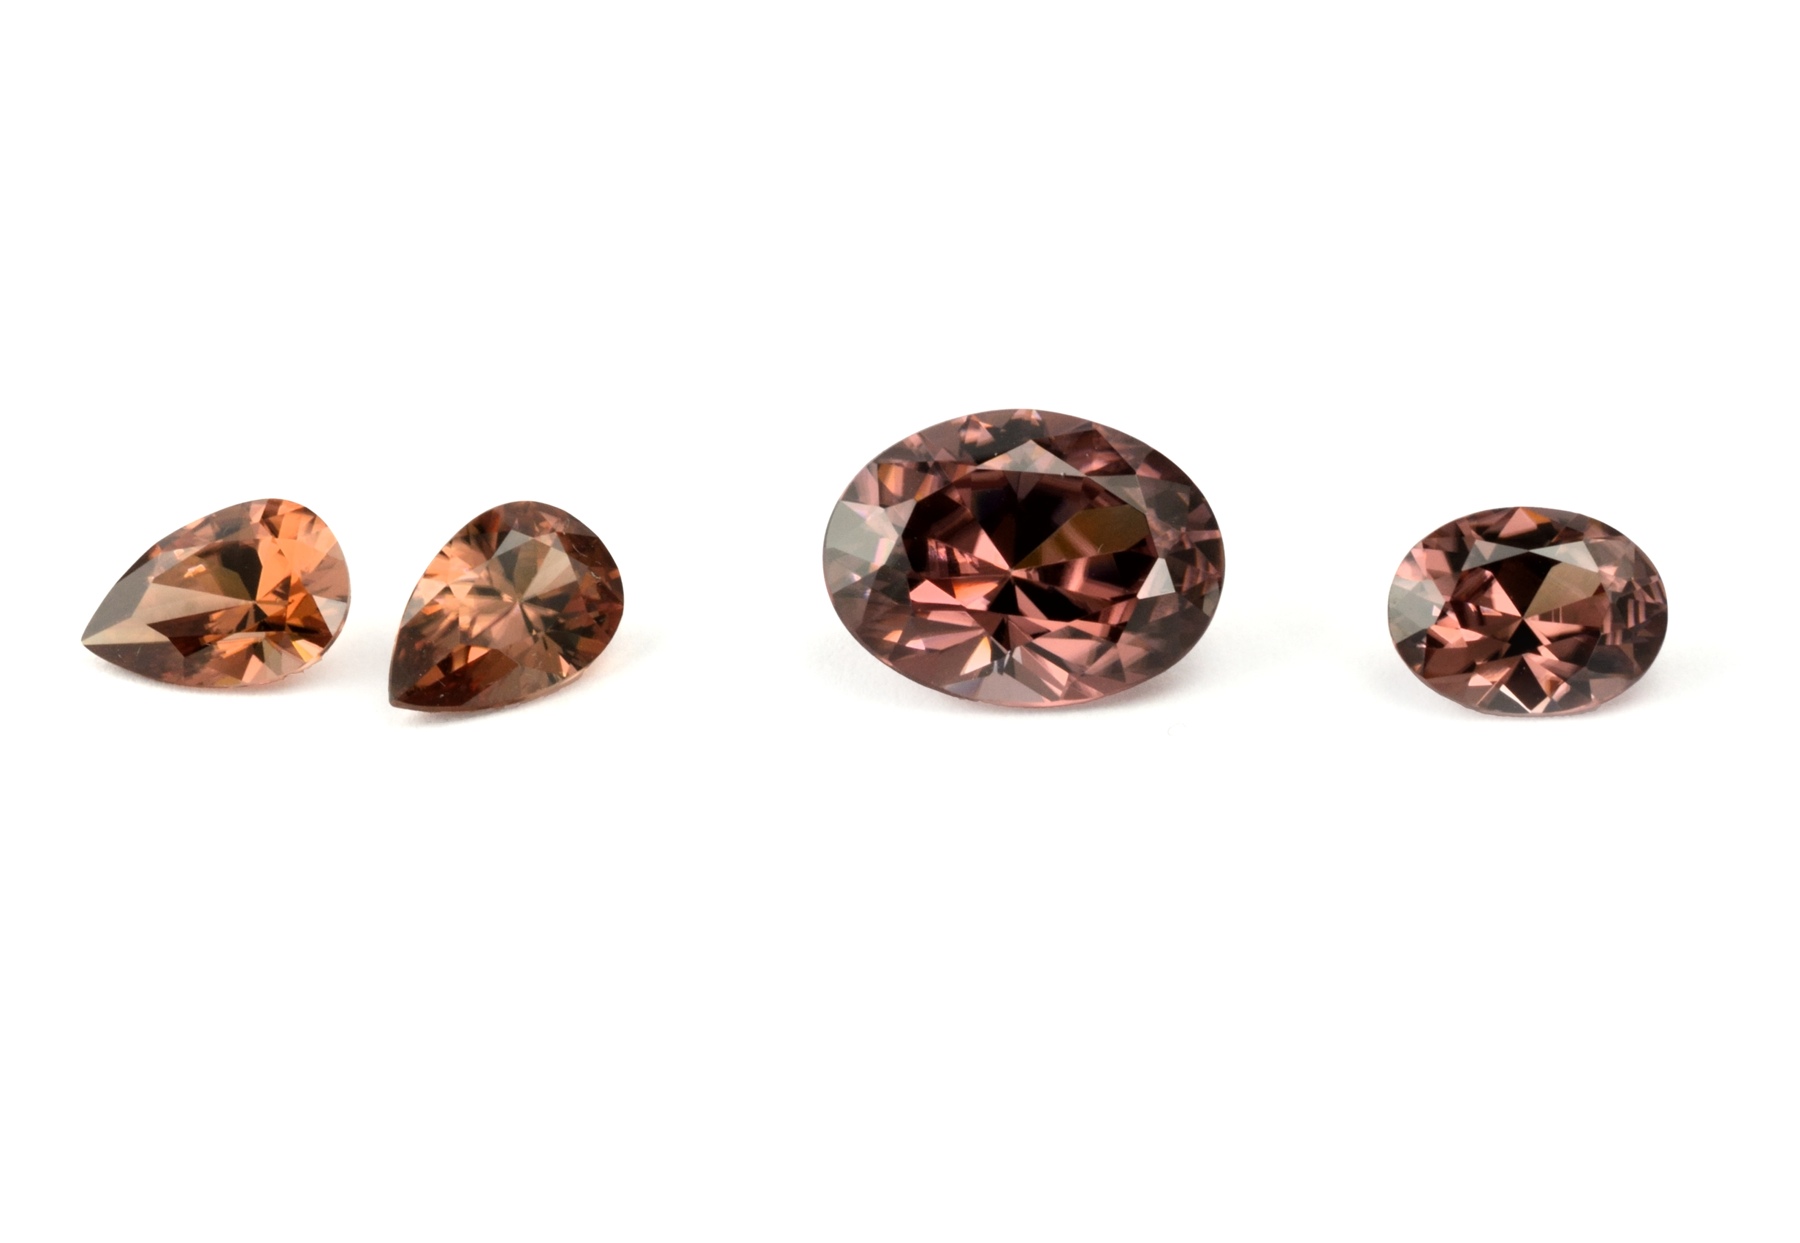 Malay zircon gemstones